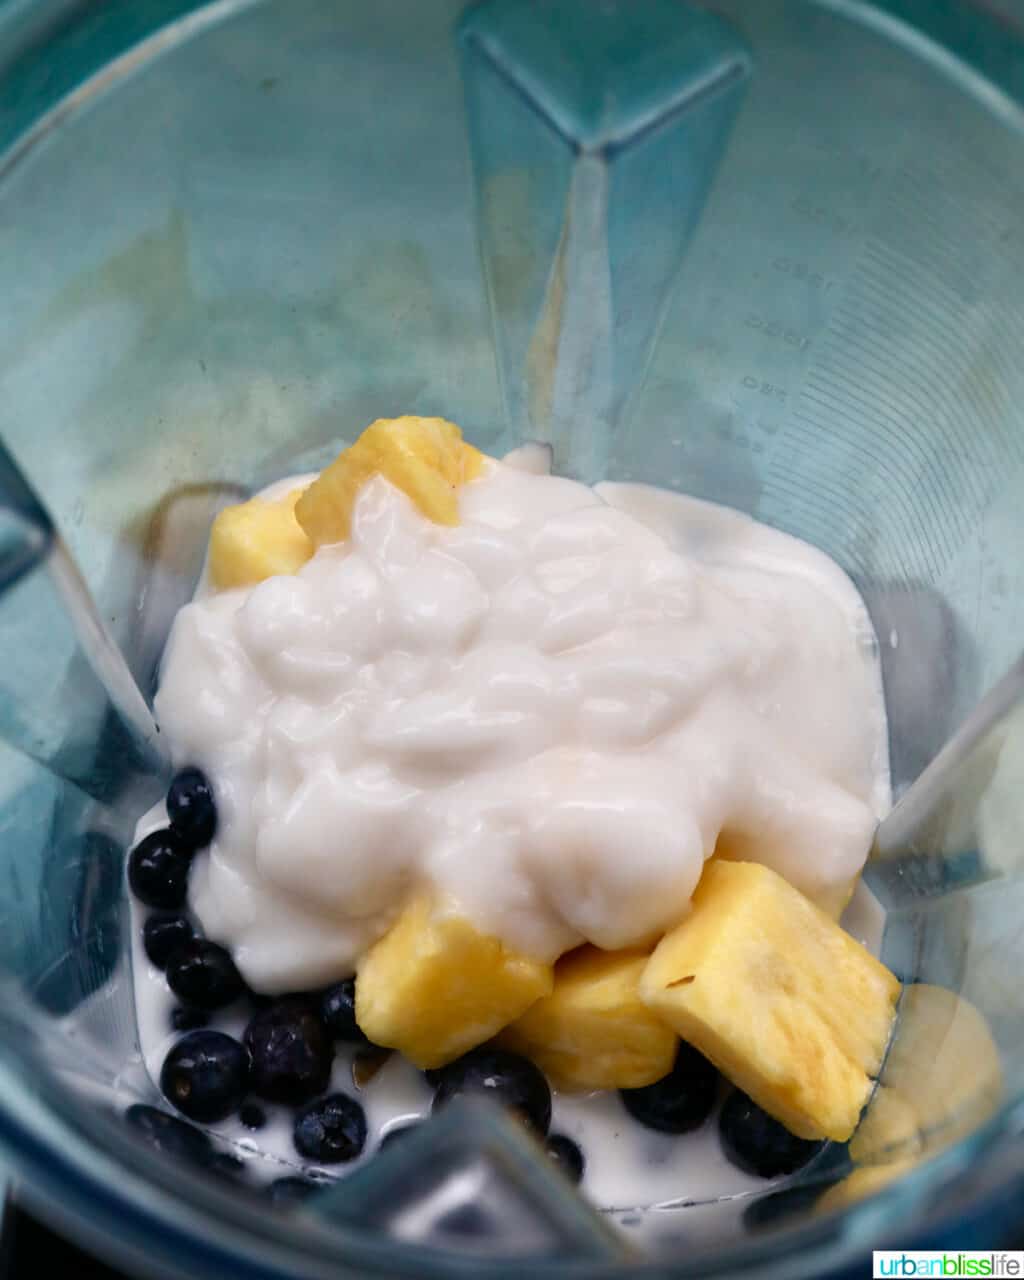 yogurt, pineapple chunks and blueberries in a Vitamix blender.